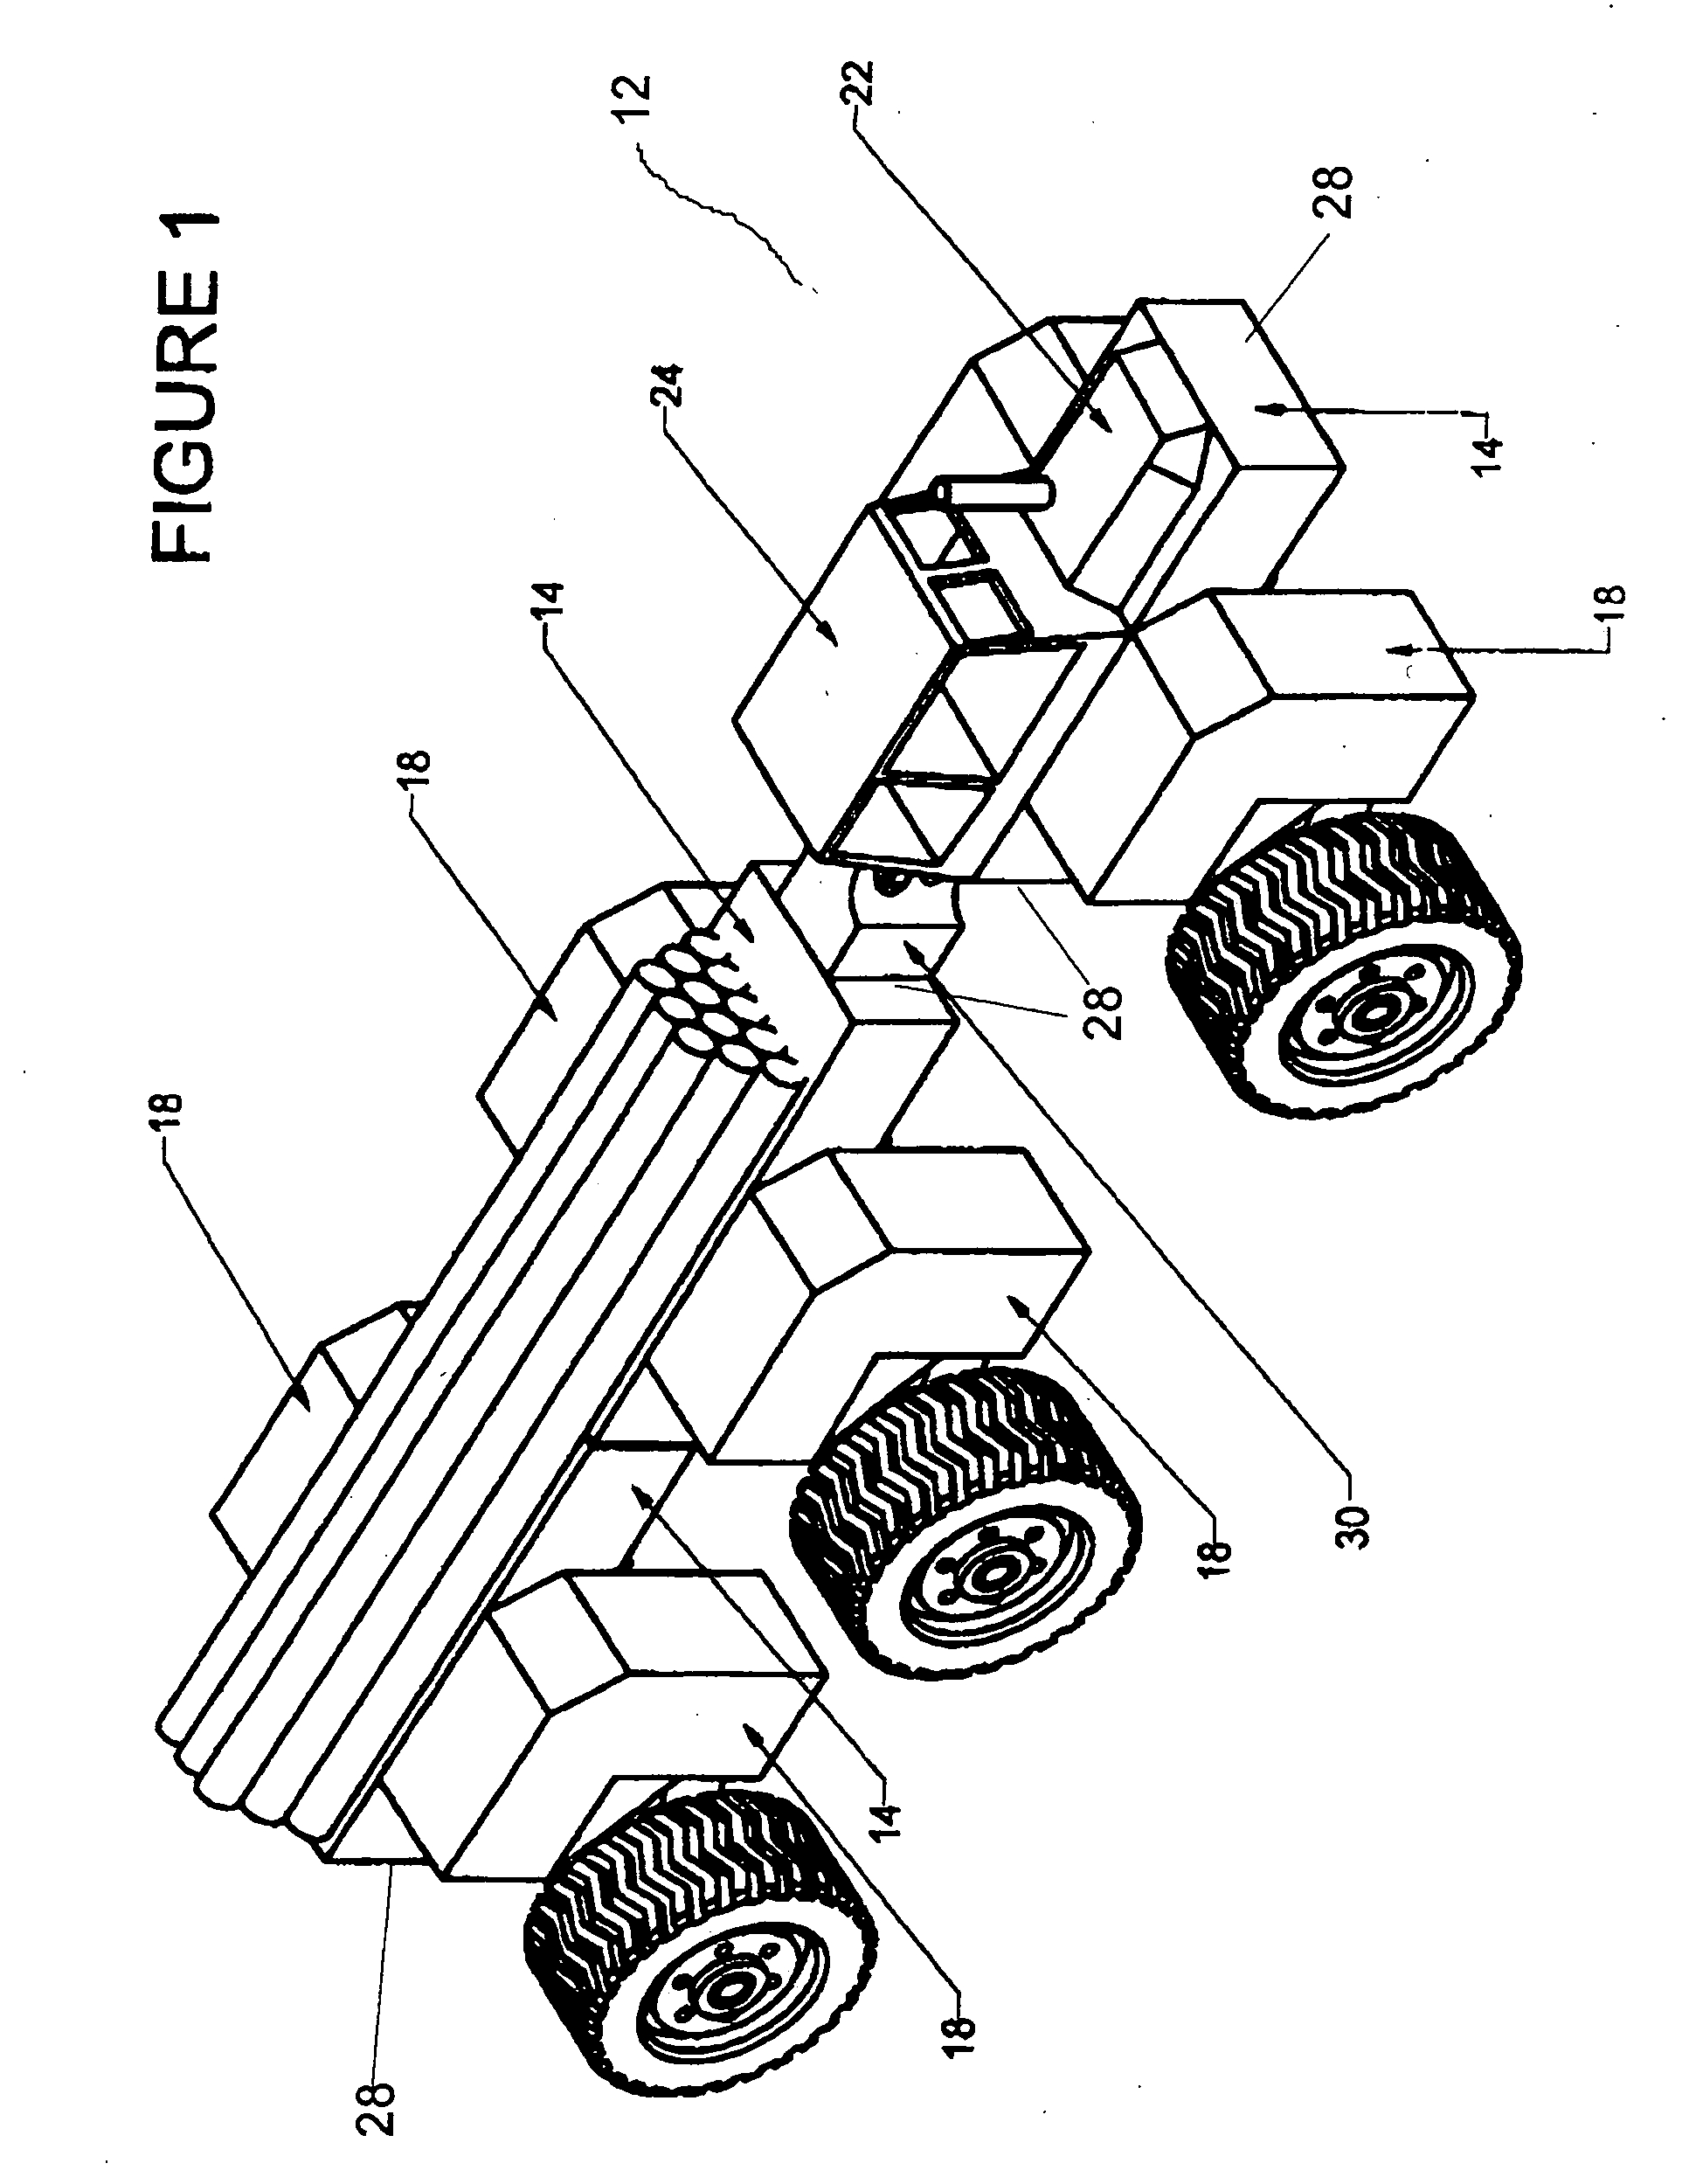 Method of making a modular vehicle and a modular vehicle